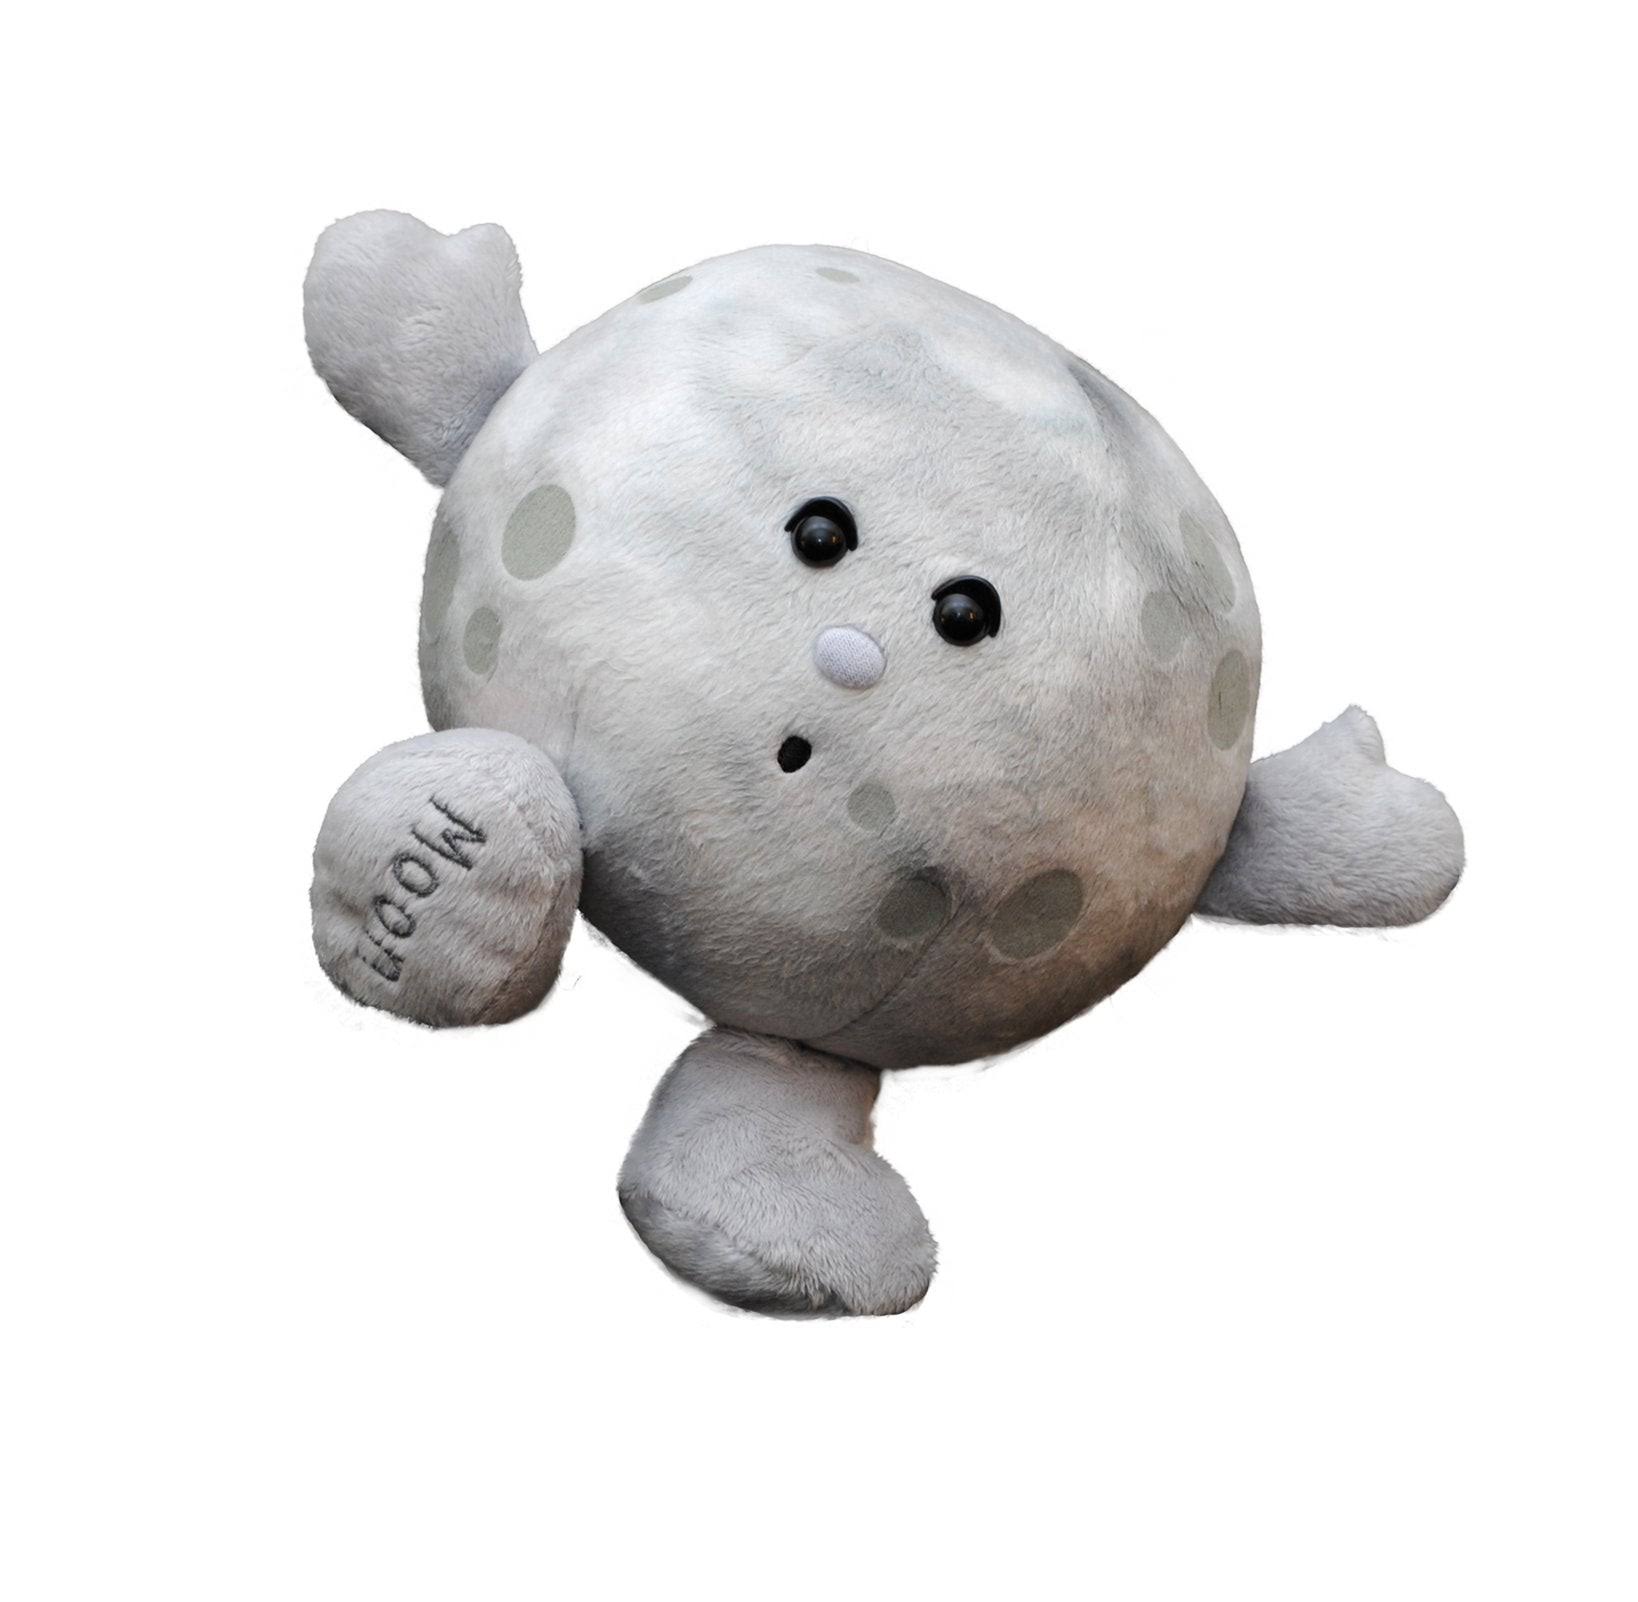 Celestial Buddies Moon Plush Toy